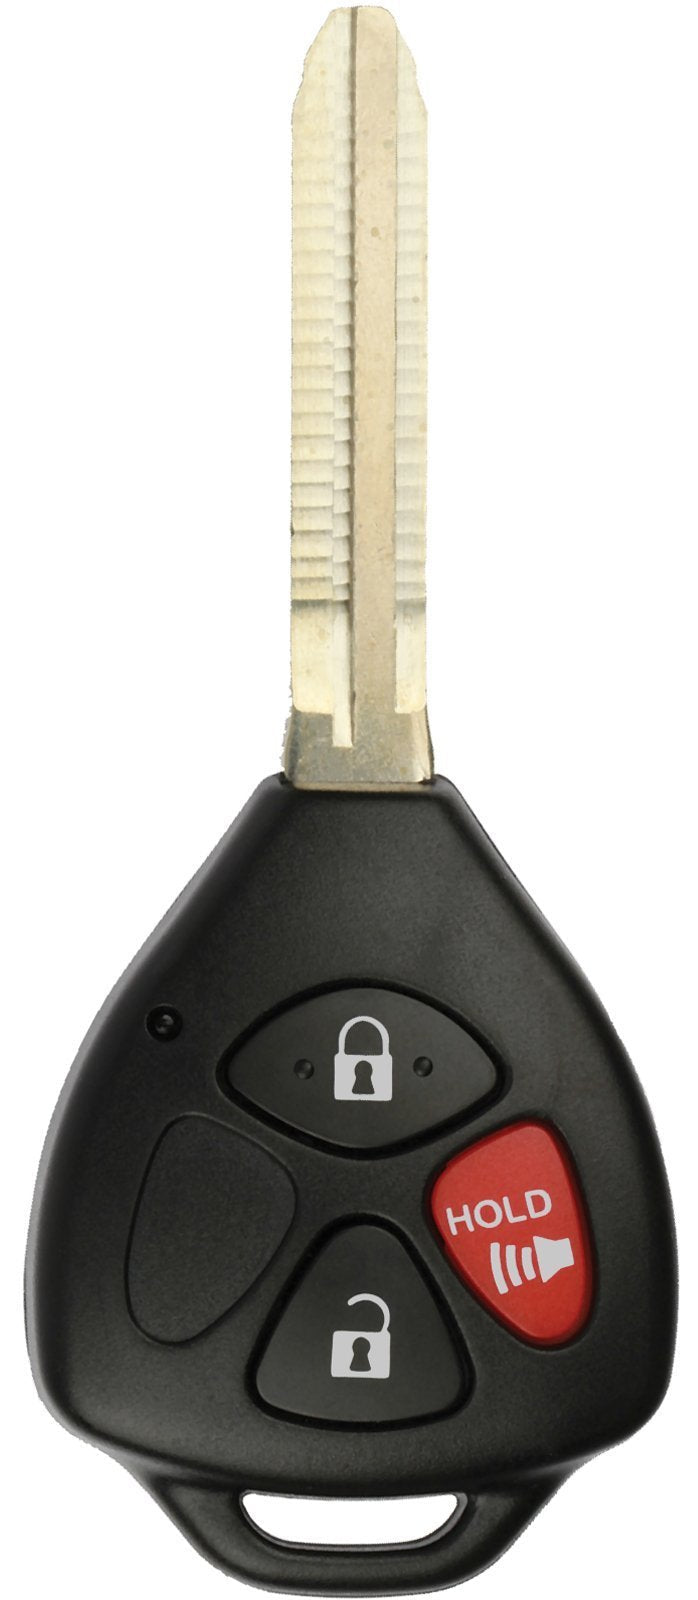 KeylessOption Keyless Entry Remote Control Car Key Fob Replacement for HYQ12BBY G Chip black